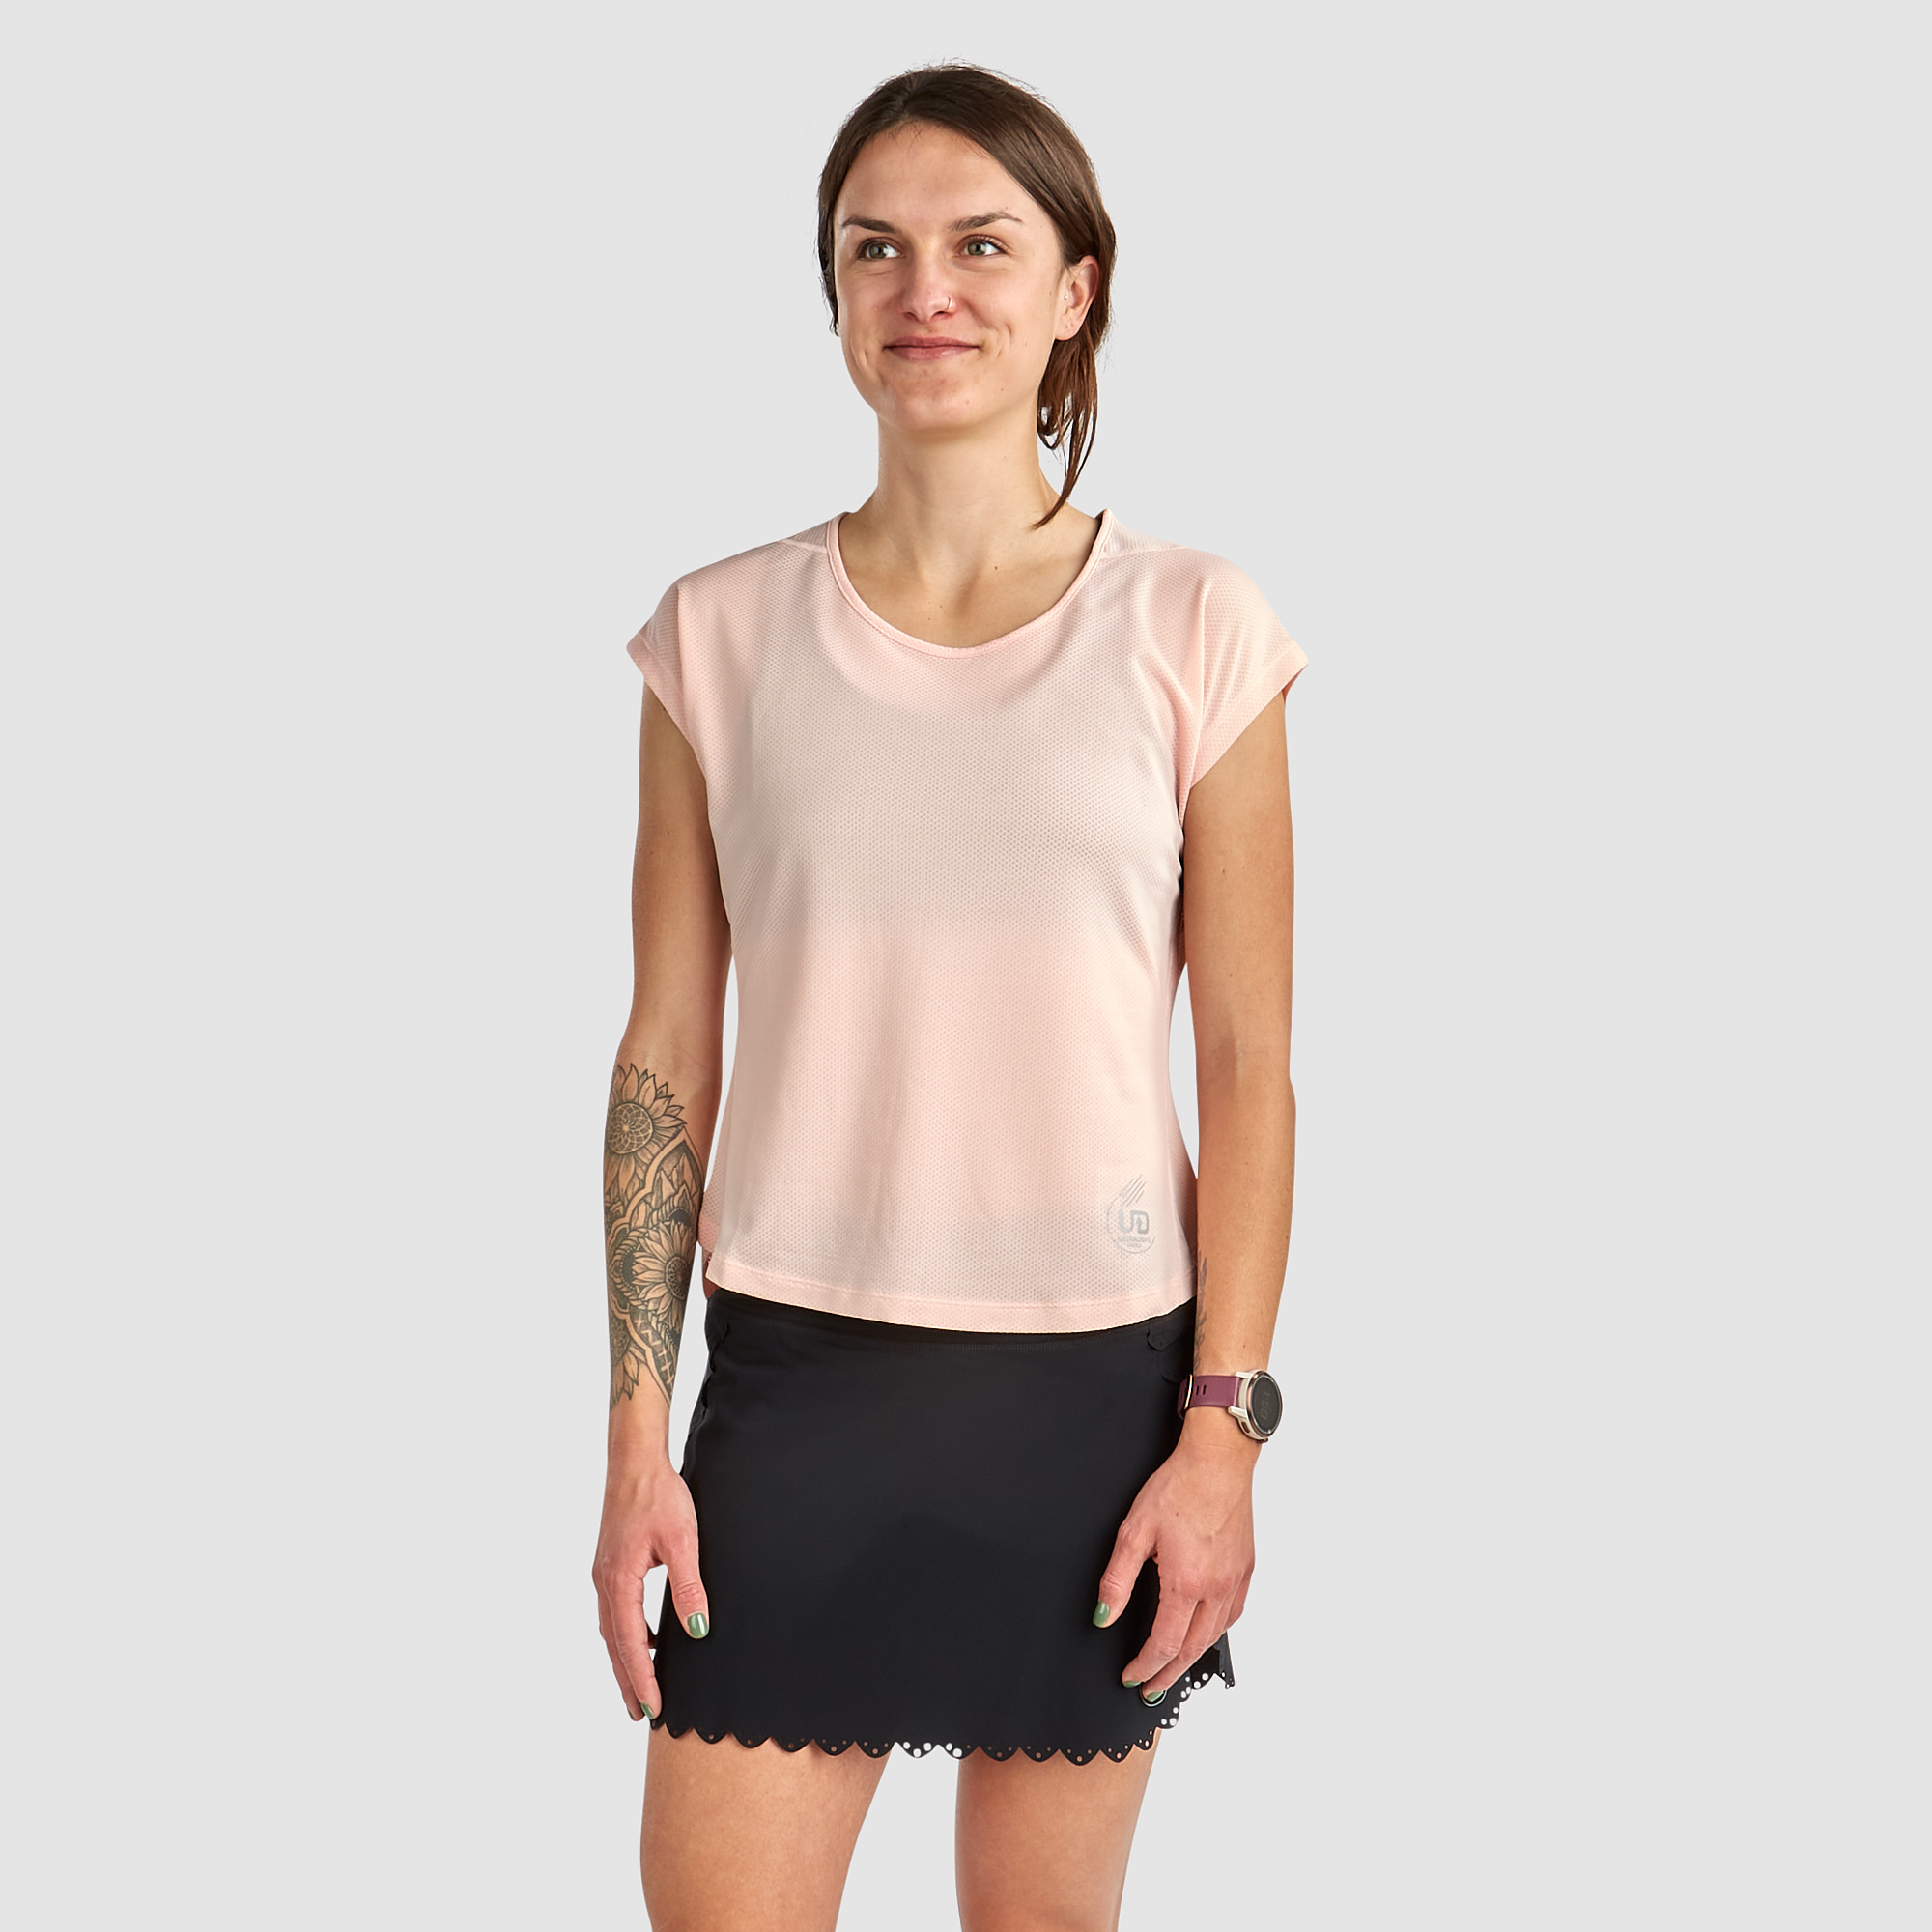 Ultimate Direction Women's Nimbus T-Shirt - Prior Year in Millennial Pink Size Medium